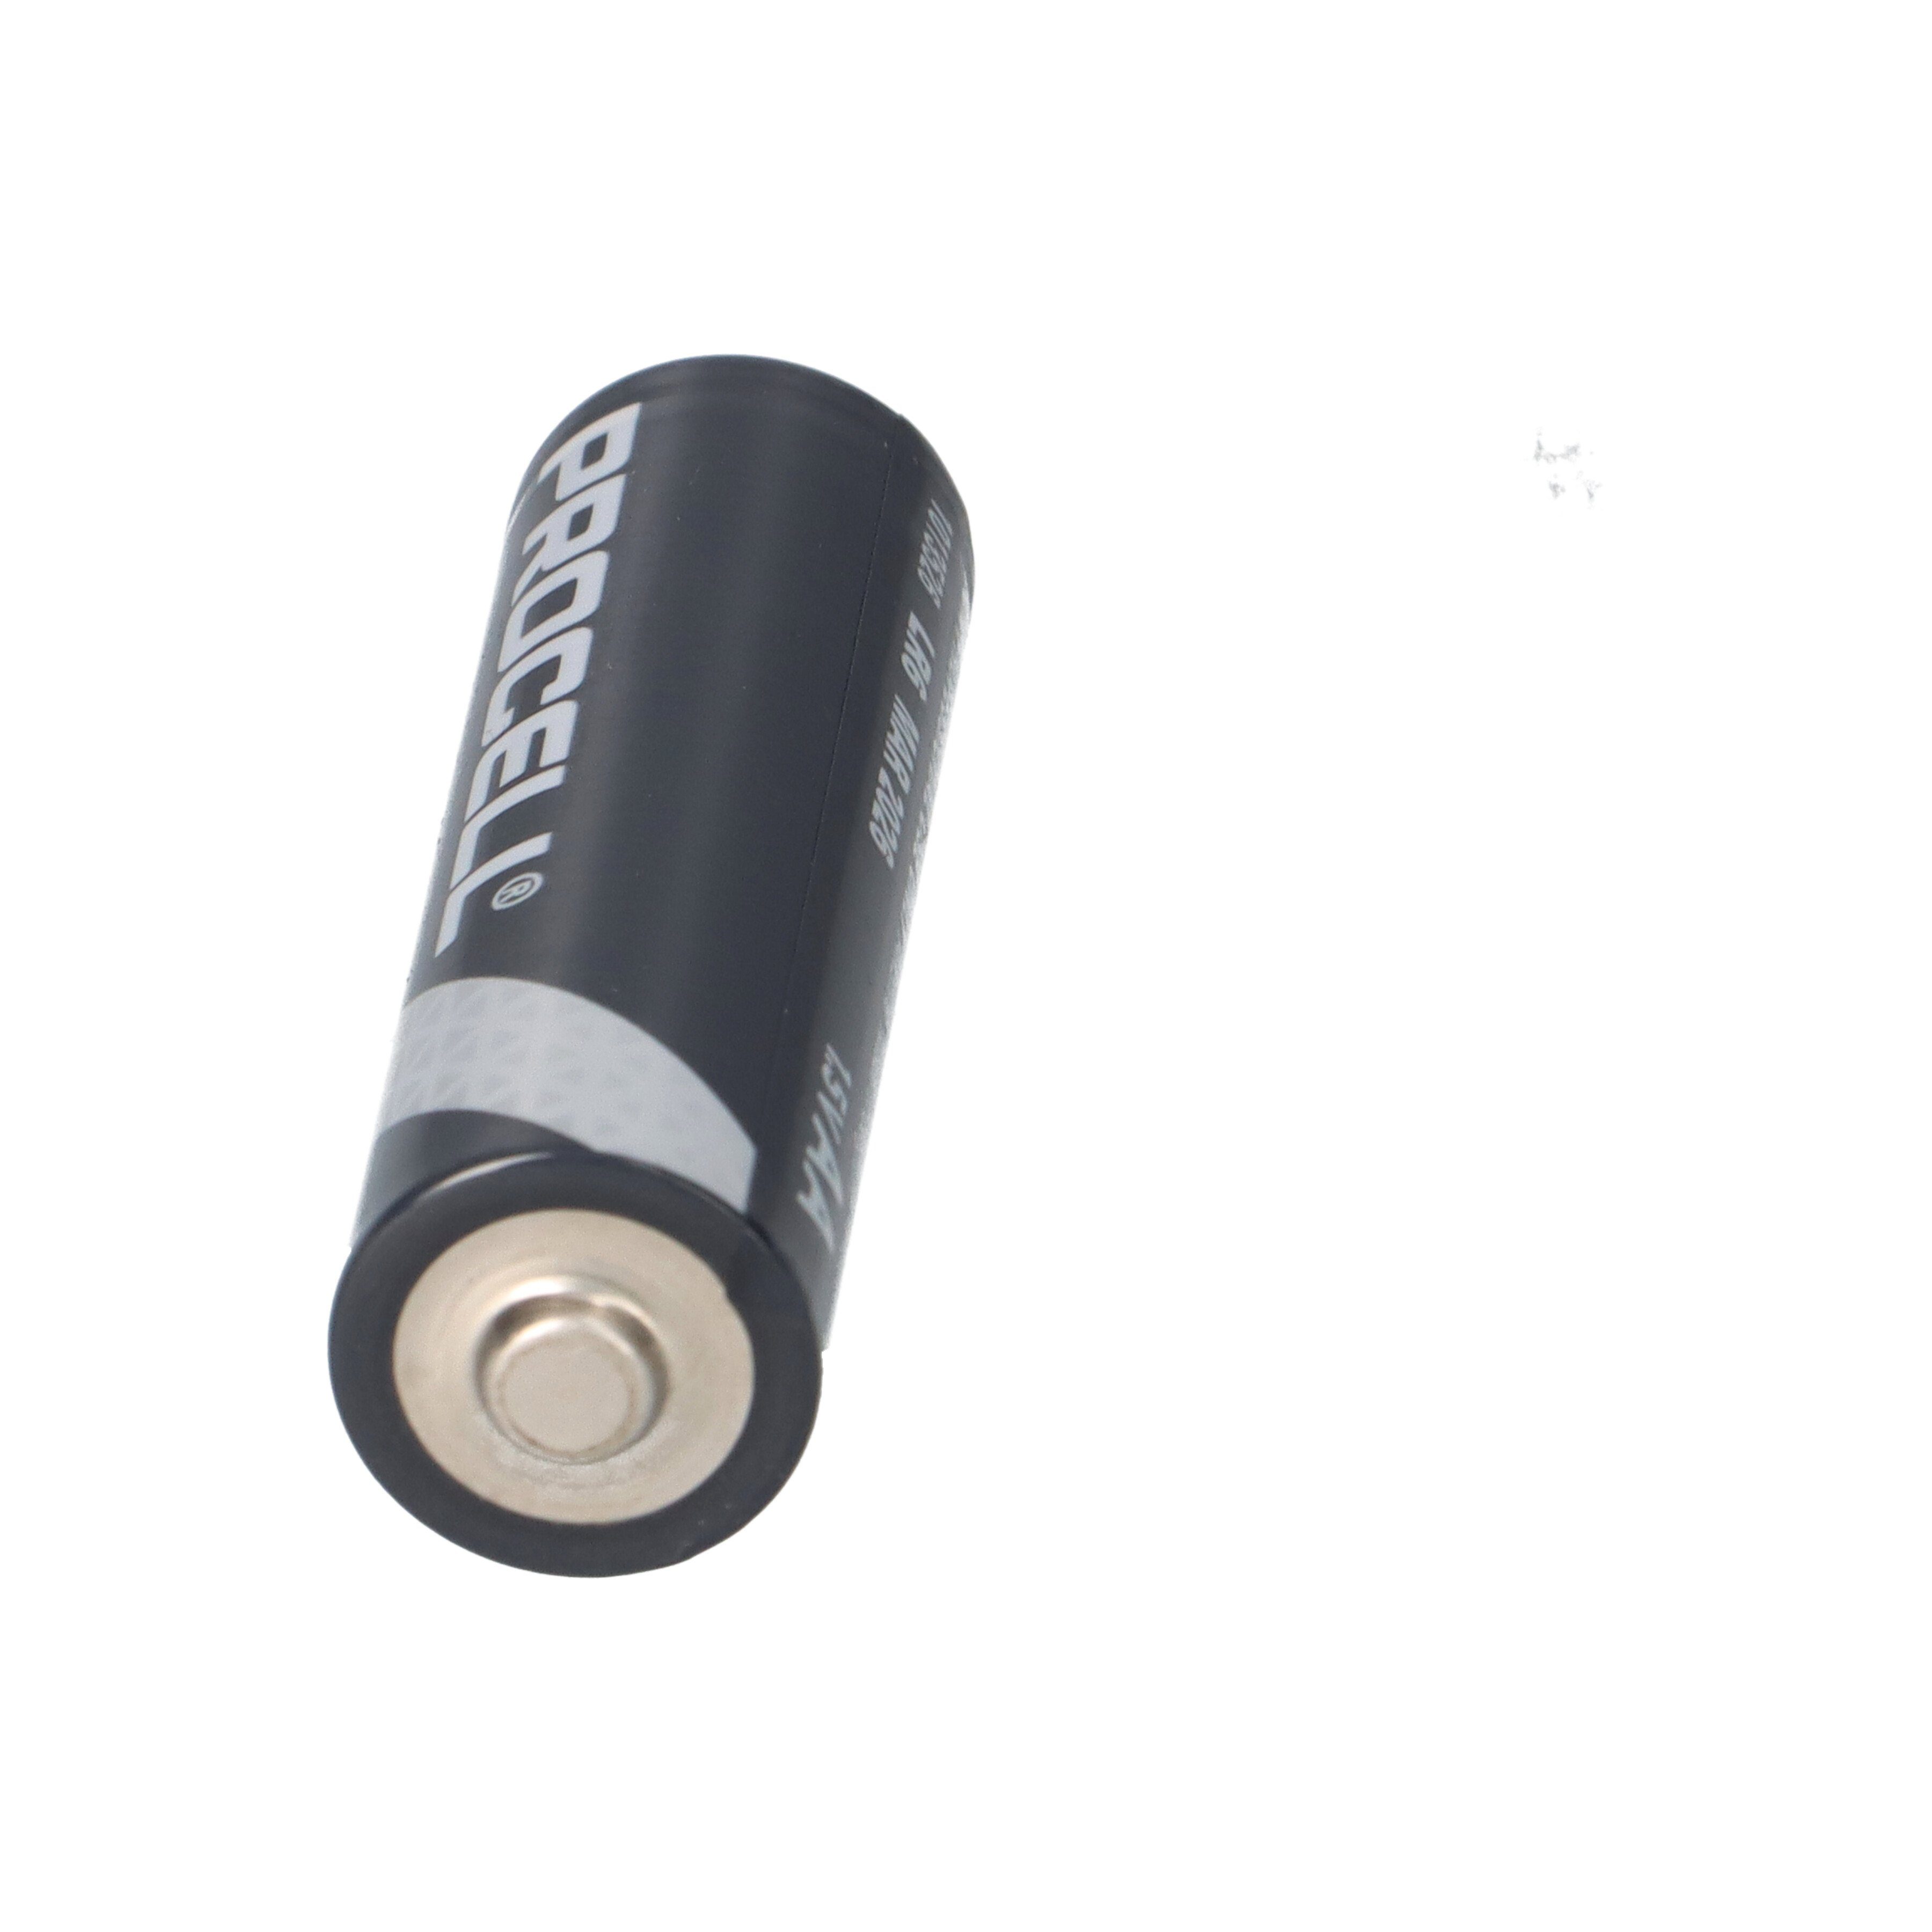 MN1500 Batterie Mignon AA Mignon LR6 Duracell Batterie Duracell 50x Procell